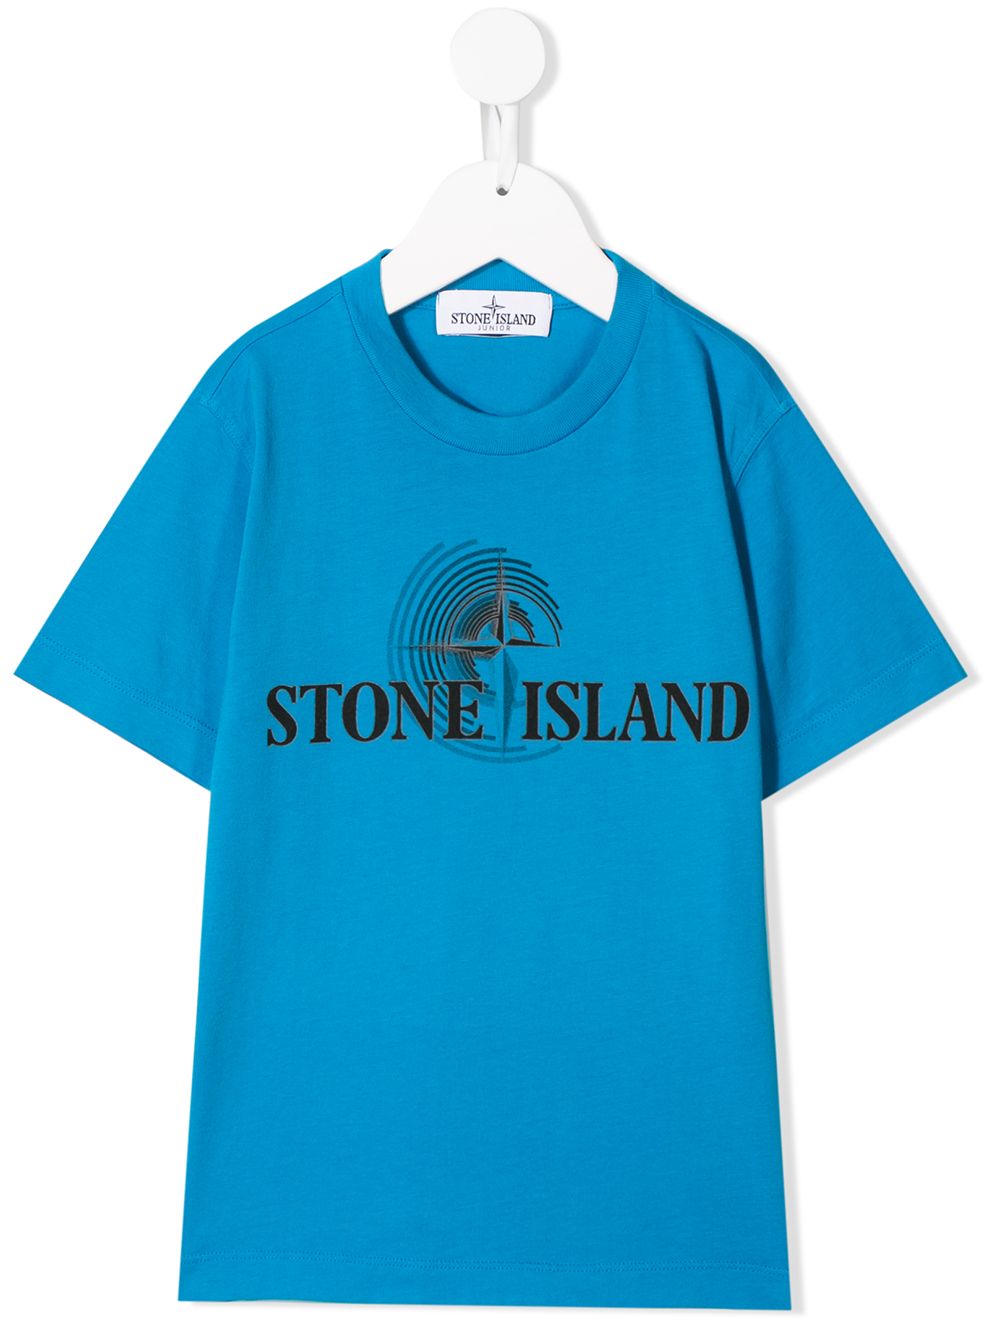 Island junior. Футболка для мальчика 12 лет стон Исланд. Stone Island Junior футболка. Stone Island Junior Тай дай.